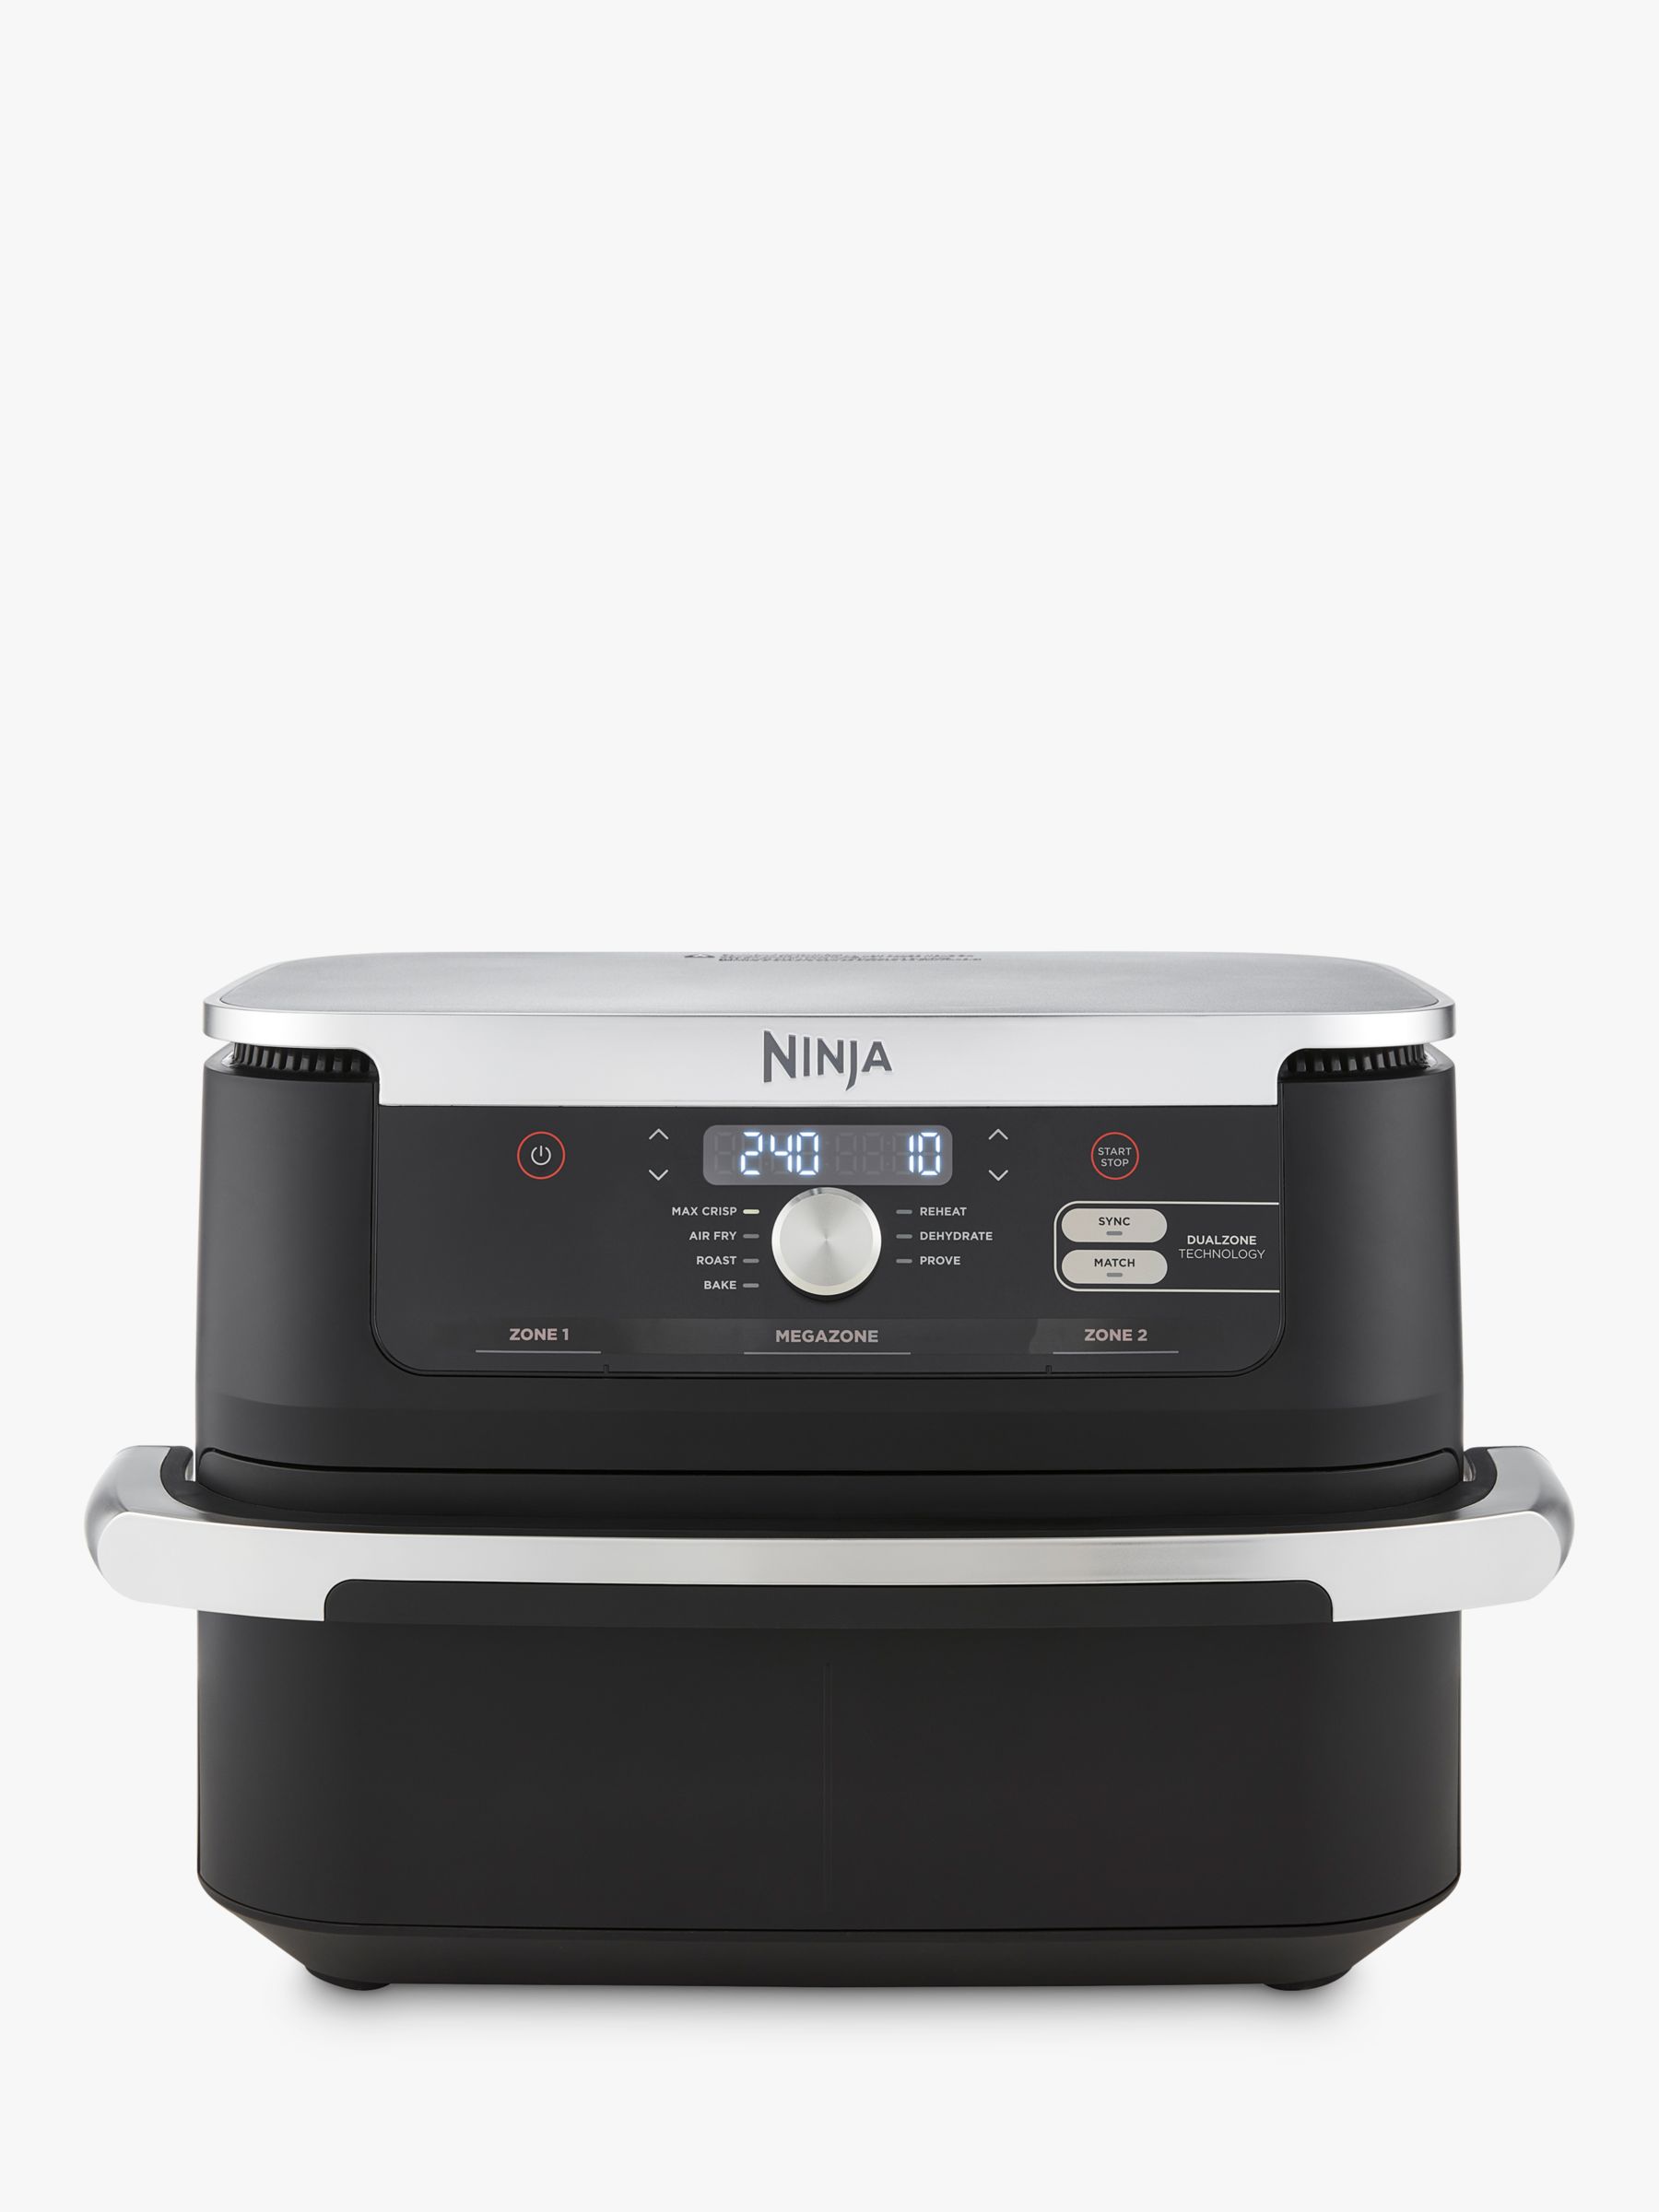 Ninja 5.5-qt Air Fryer Max XL with MaxCrisp Technology on QVC 